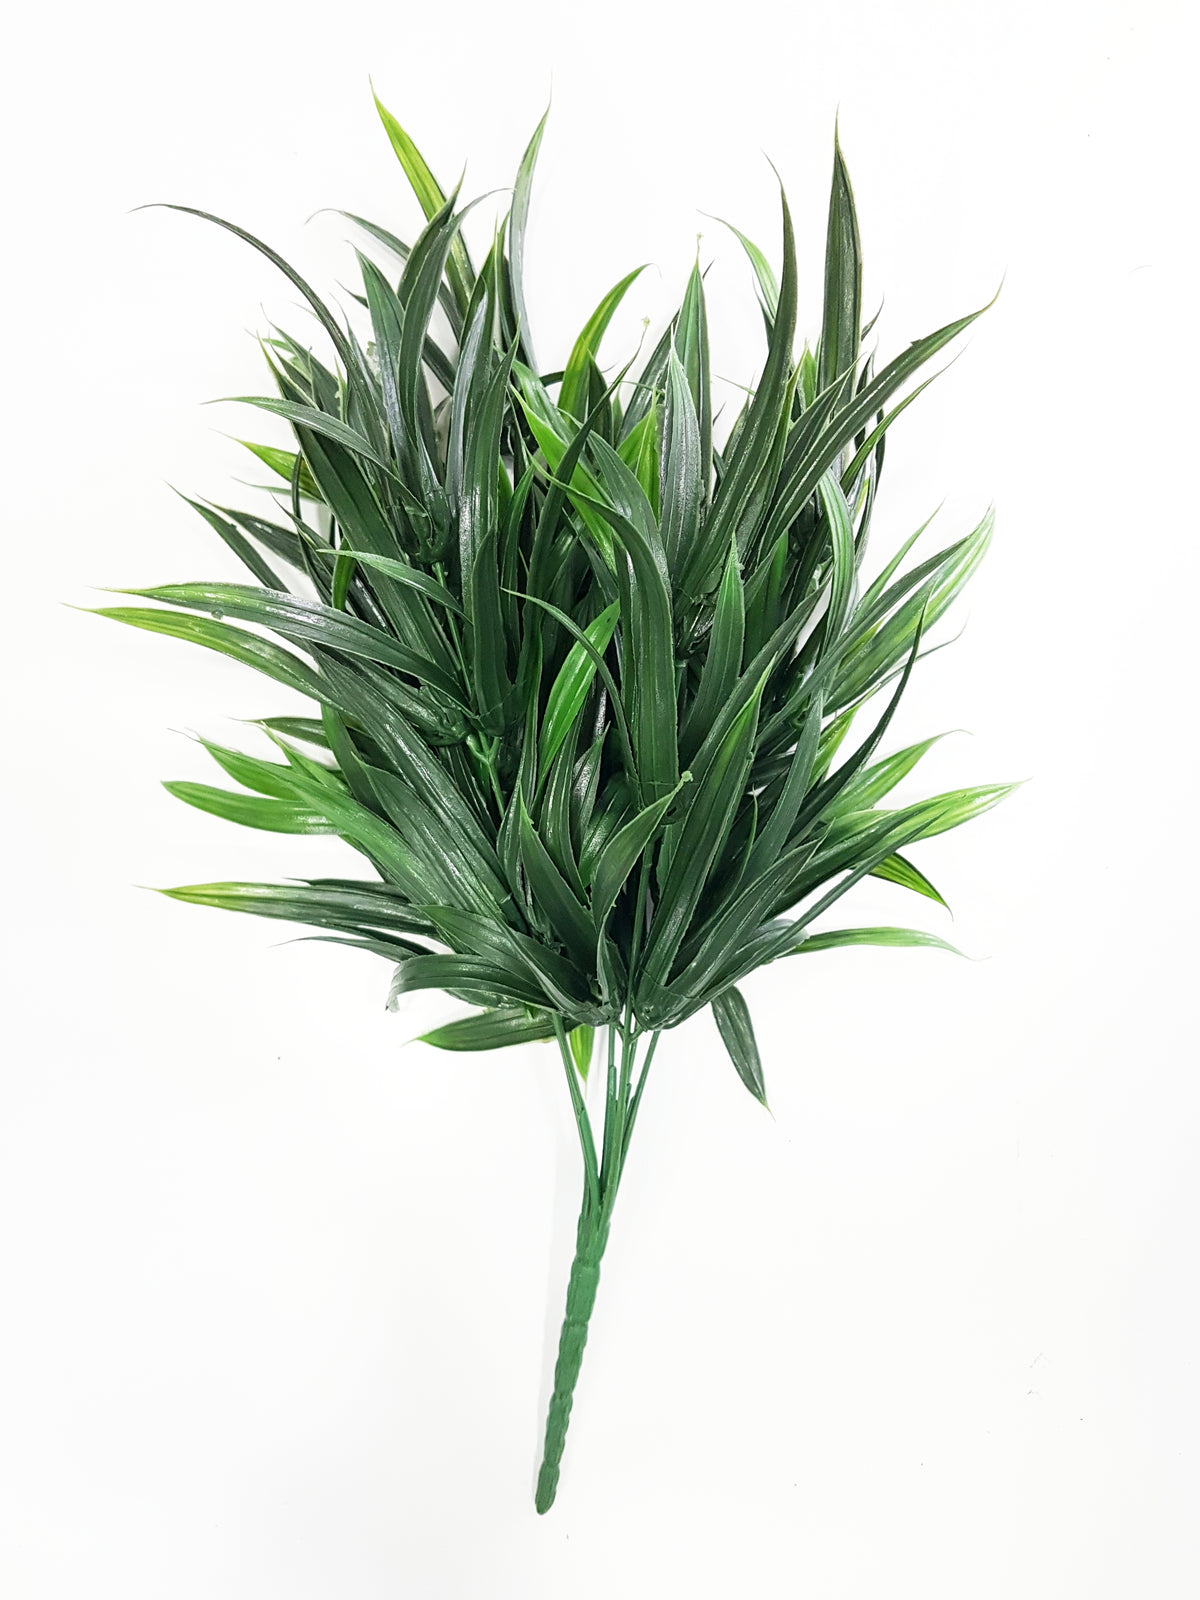 Artificial Pandan leaf dark green foliage (Length: 30cm) - With UV protection | FBR0013